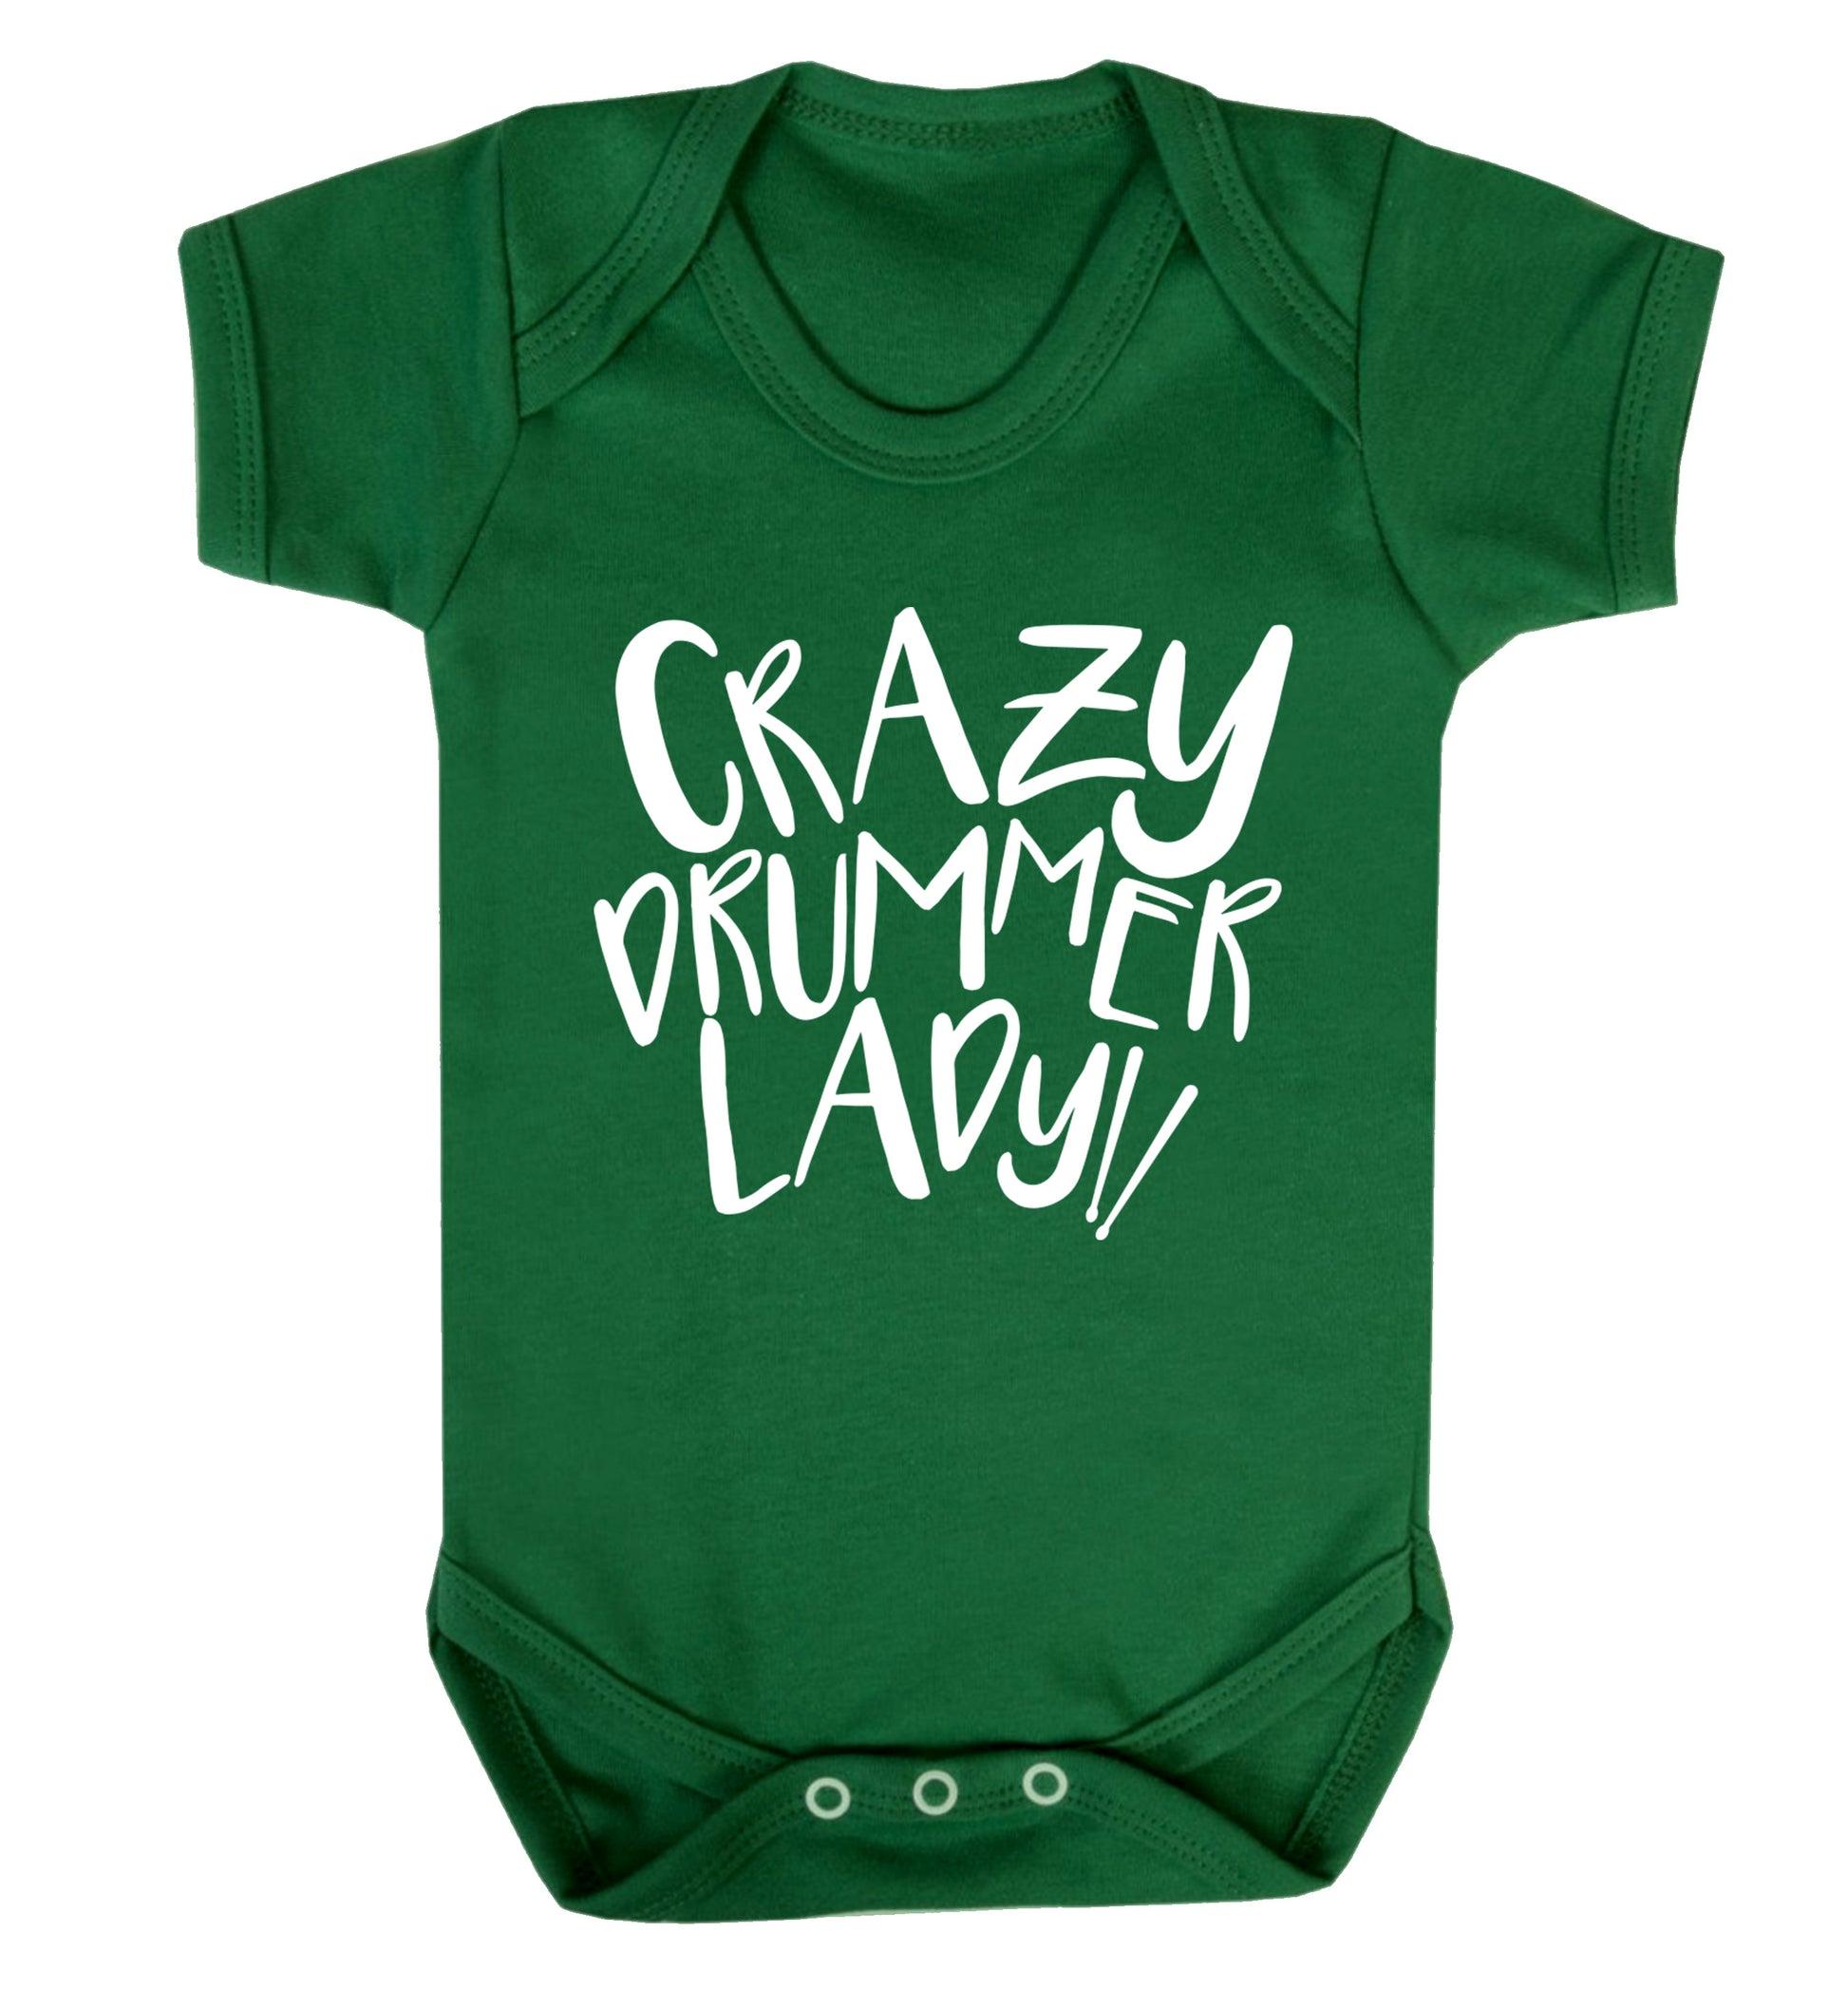 Crazy drummer lady Baby Vest green 18-24 months